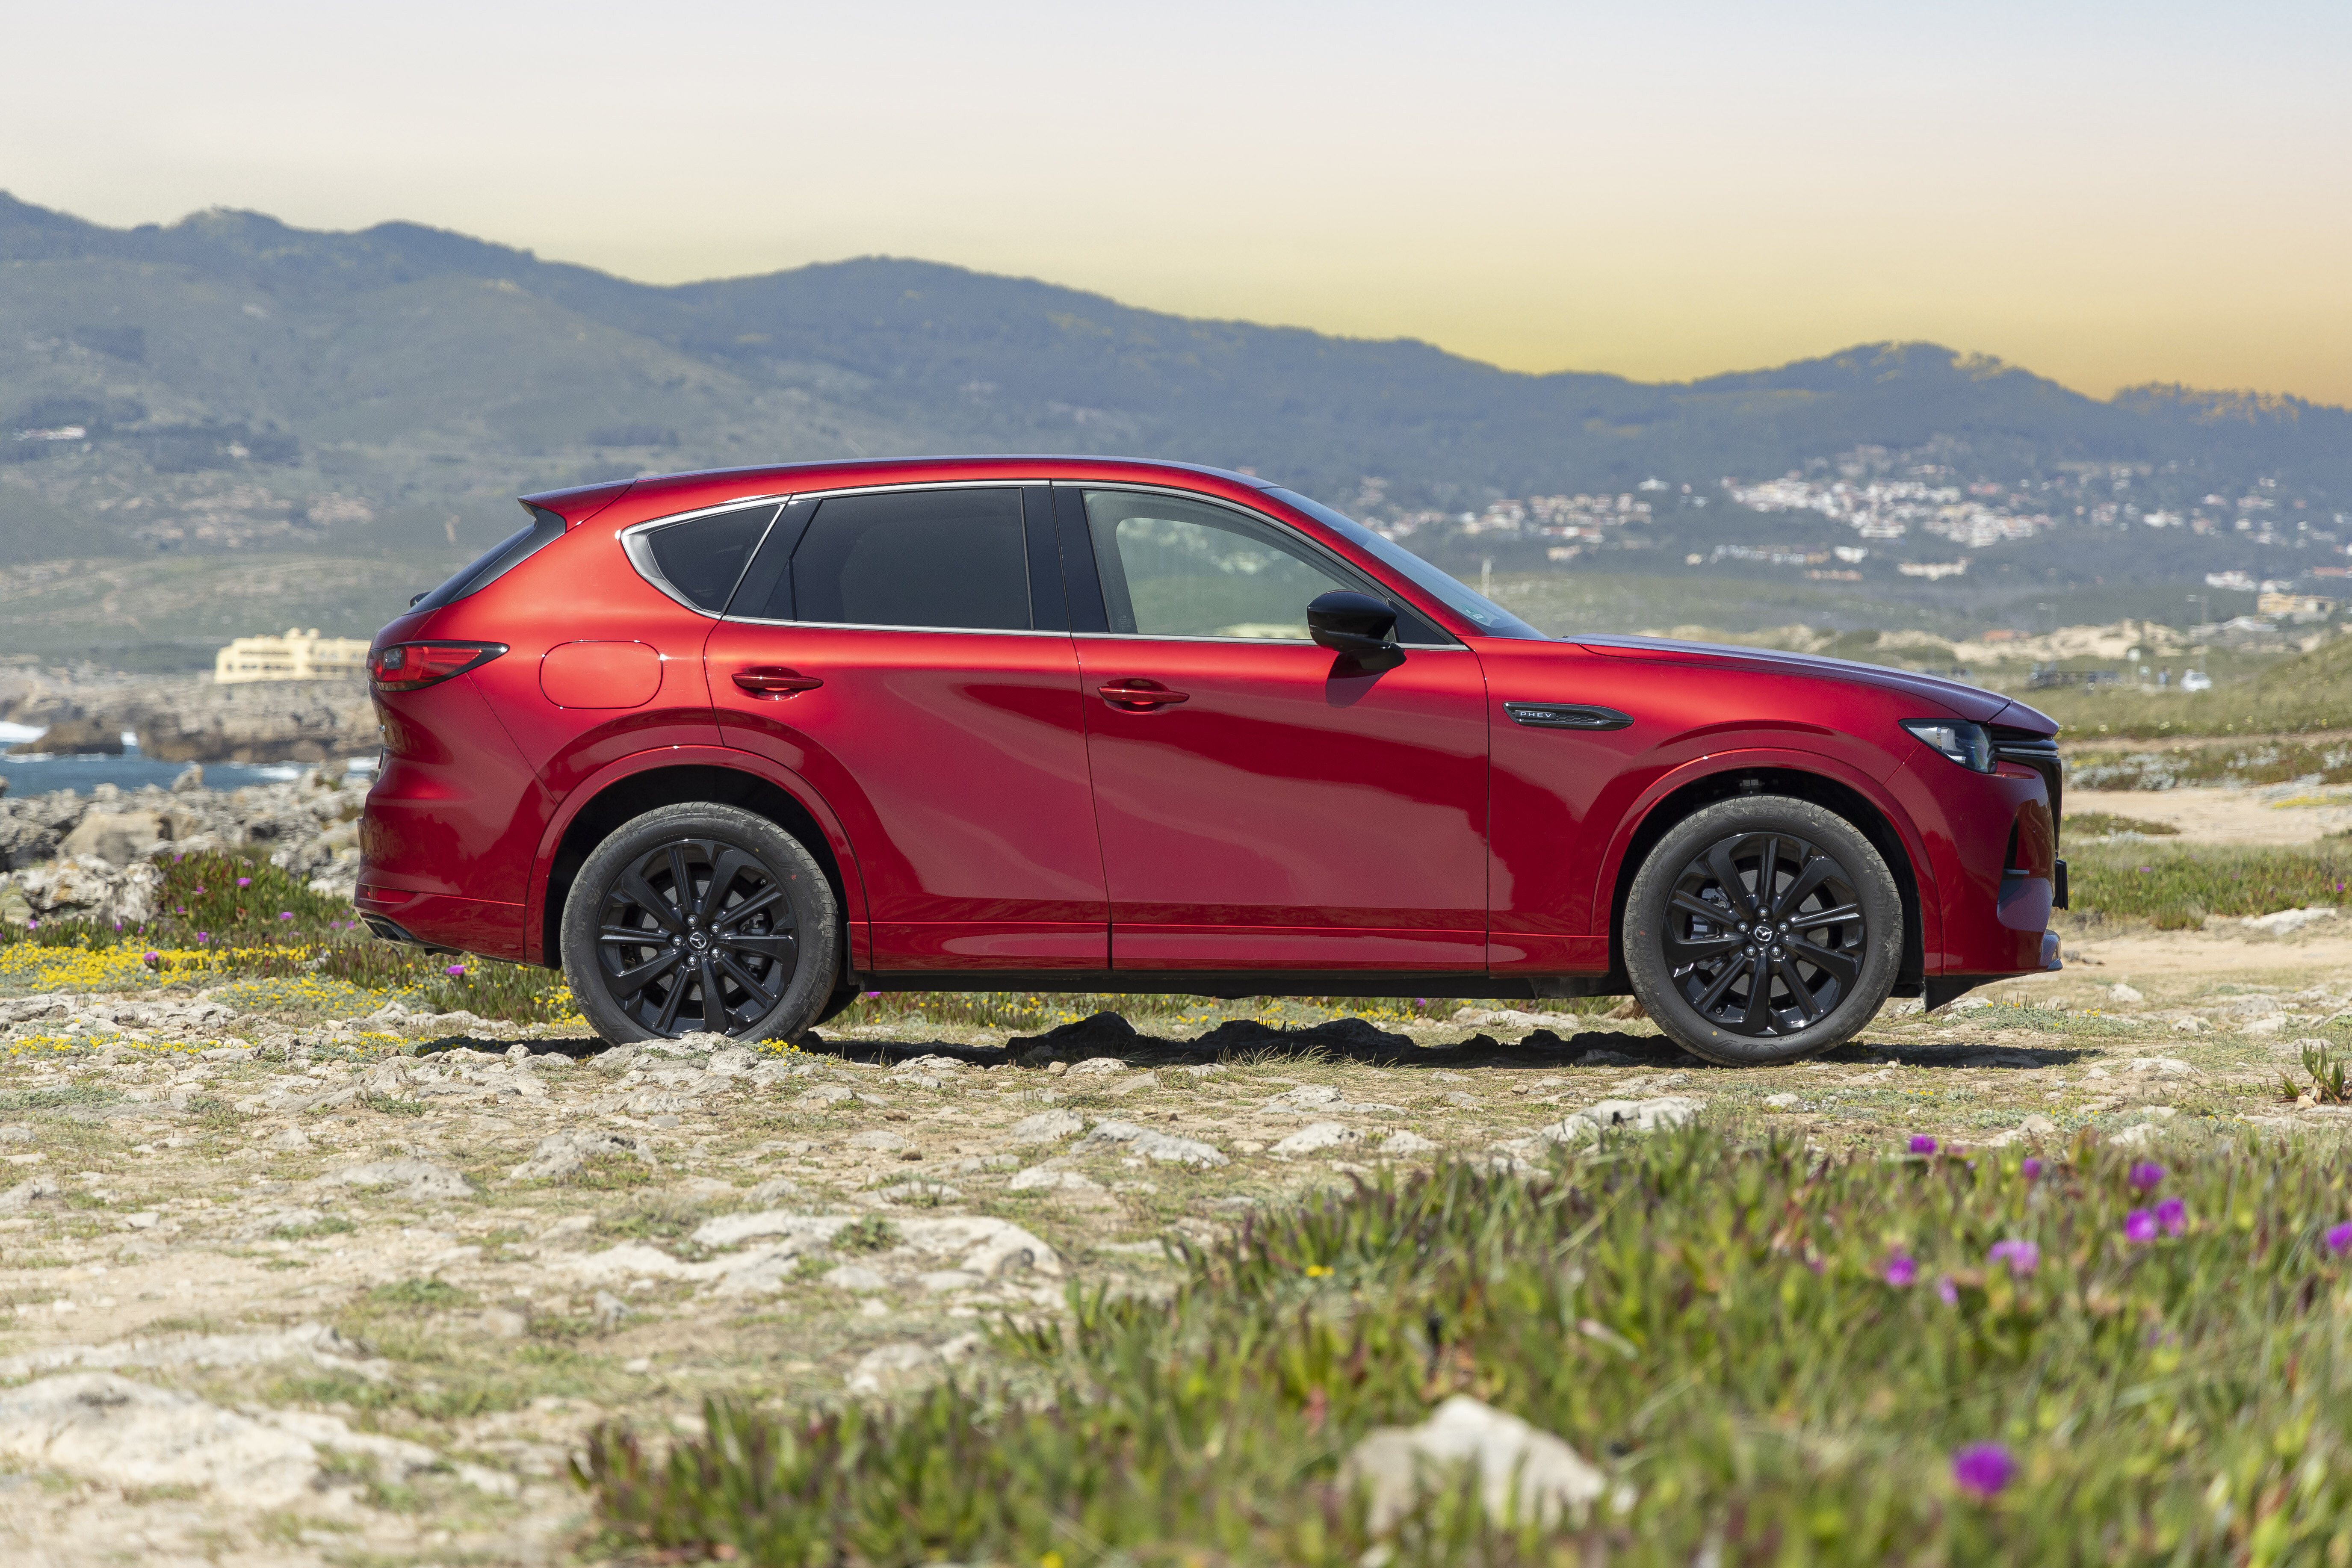 2022 Mazda CX-60 plug-in hybrid assessment: Worldwide first drive